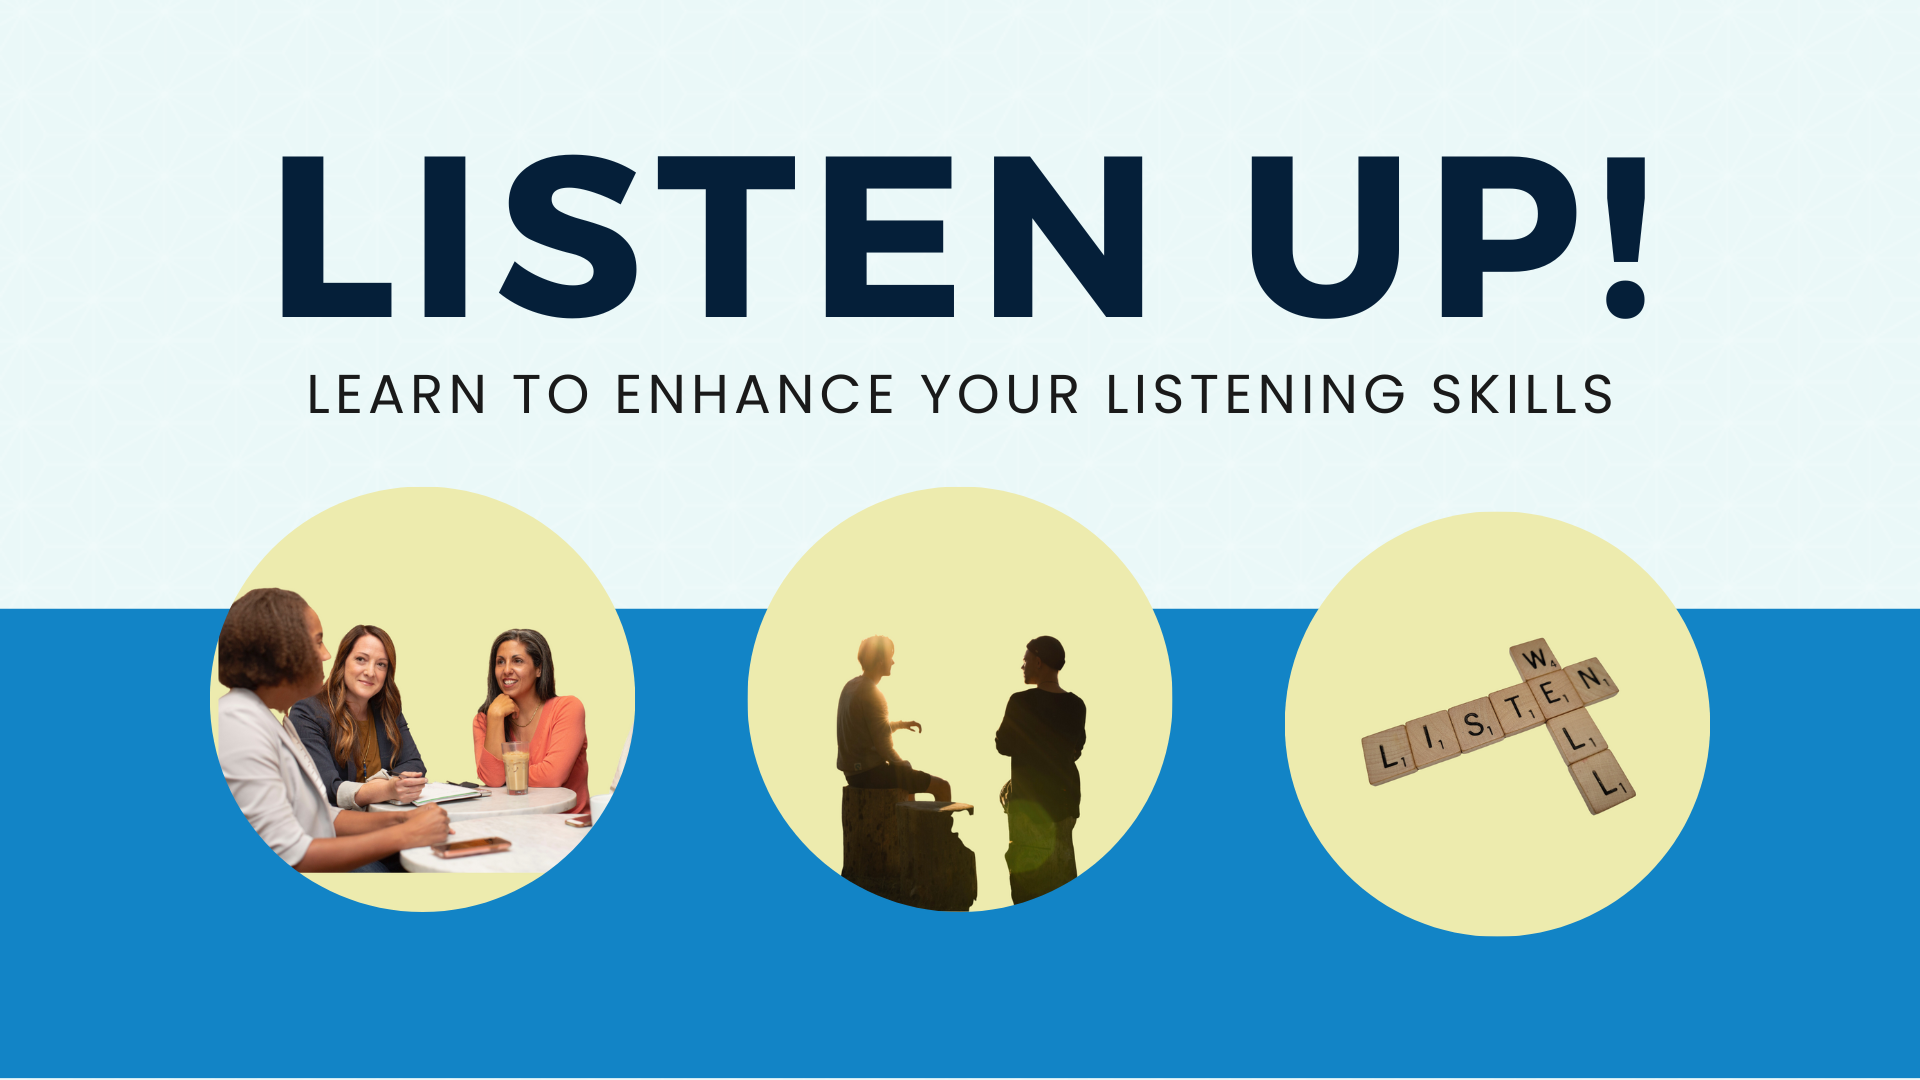 Enhance your listening skills